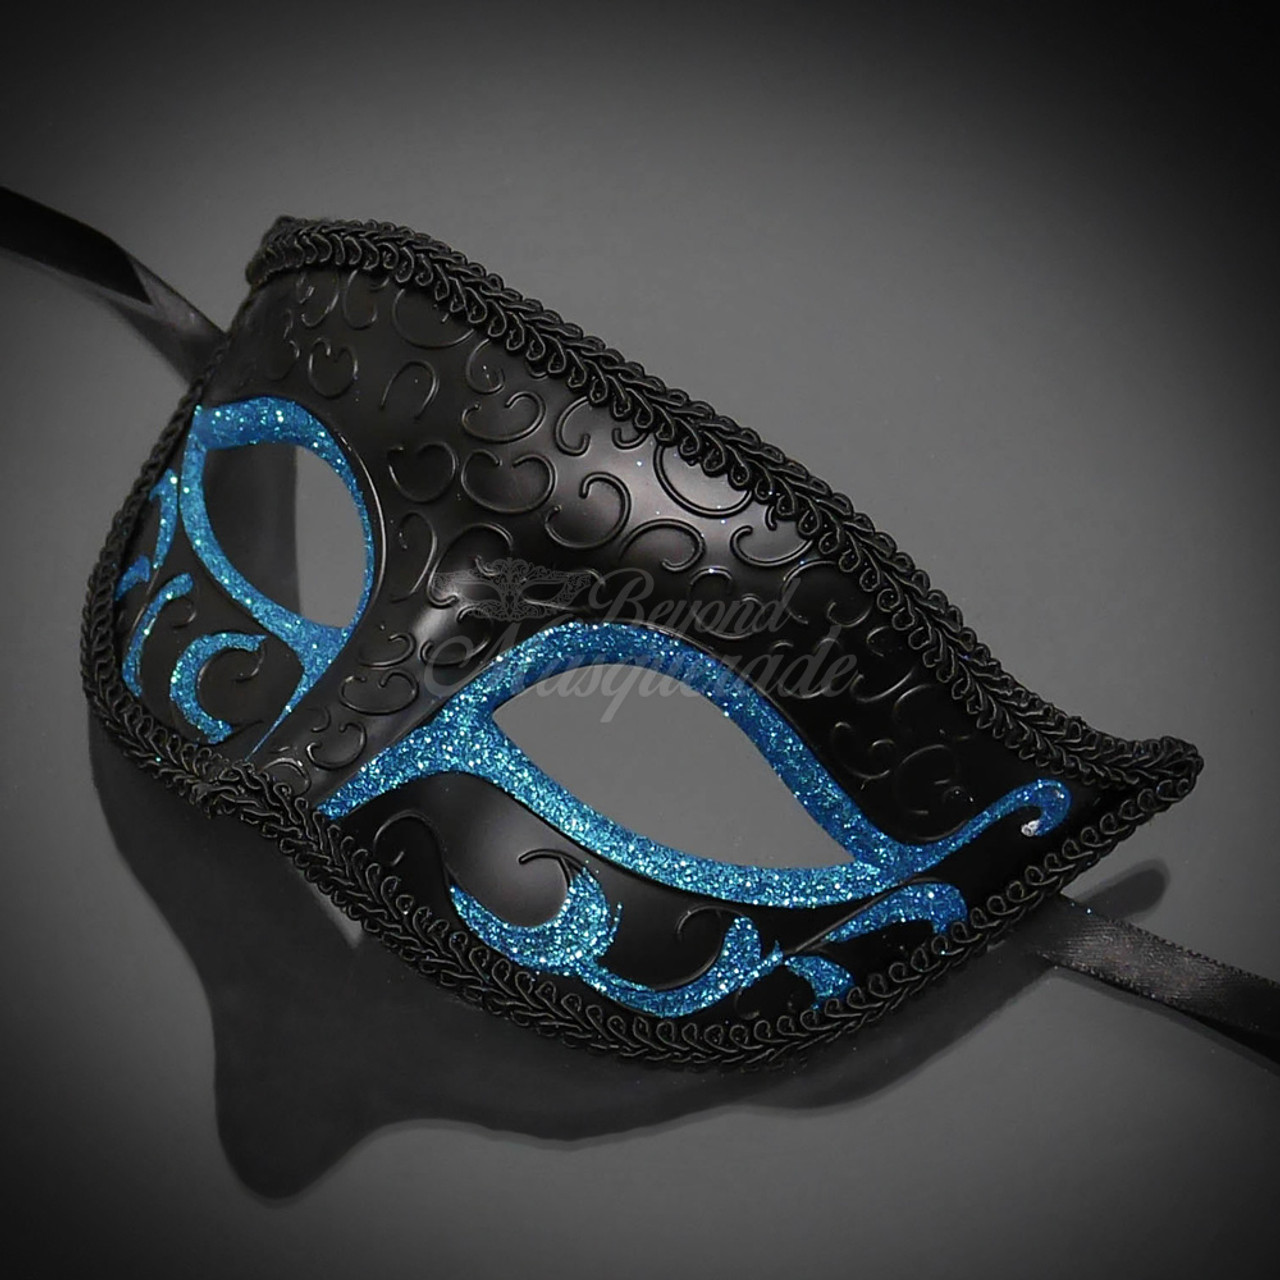 Men's Masquerade Masks Free Shipping by BeyondMasquerade.com